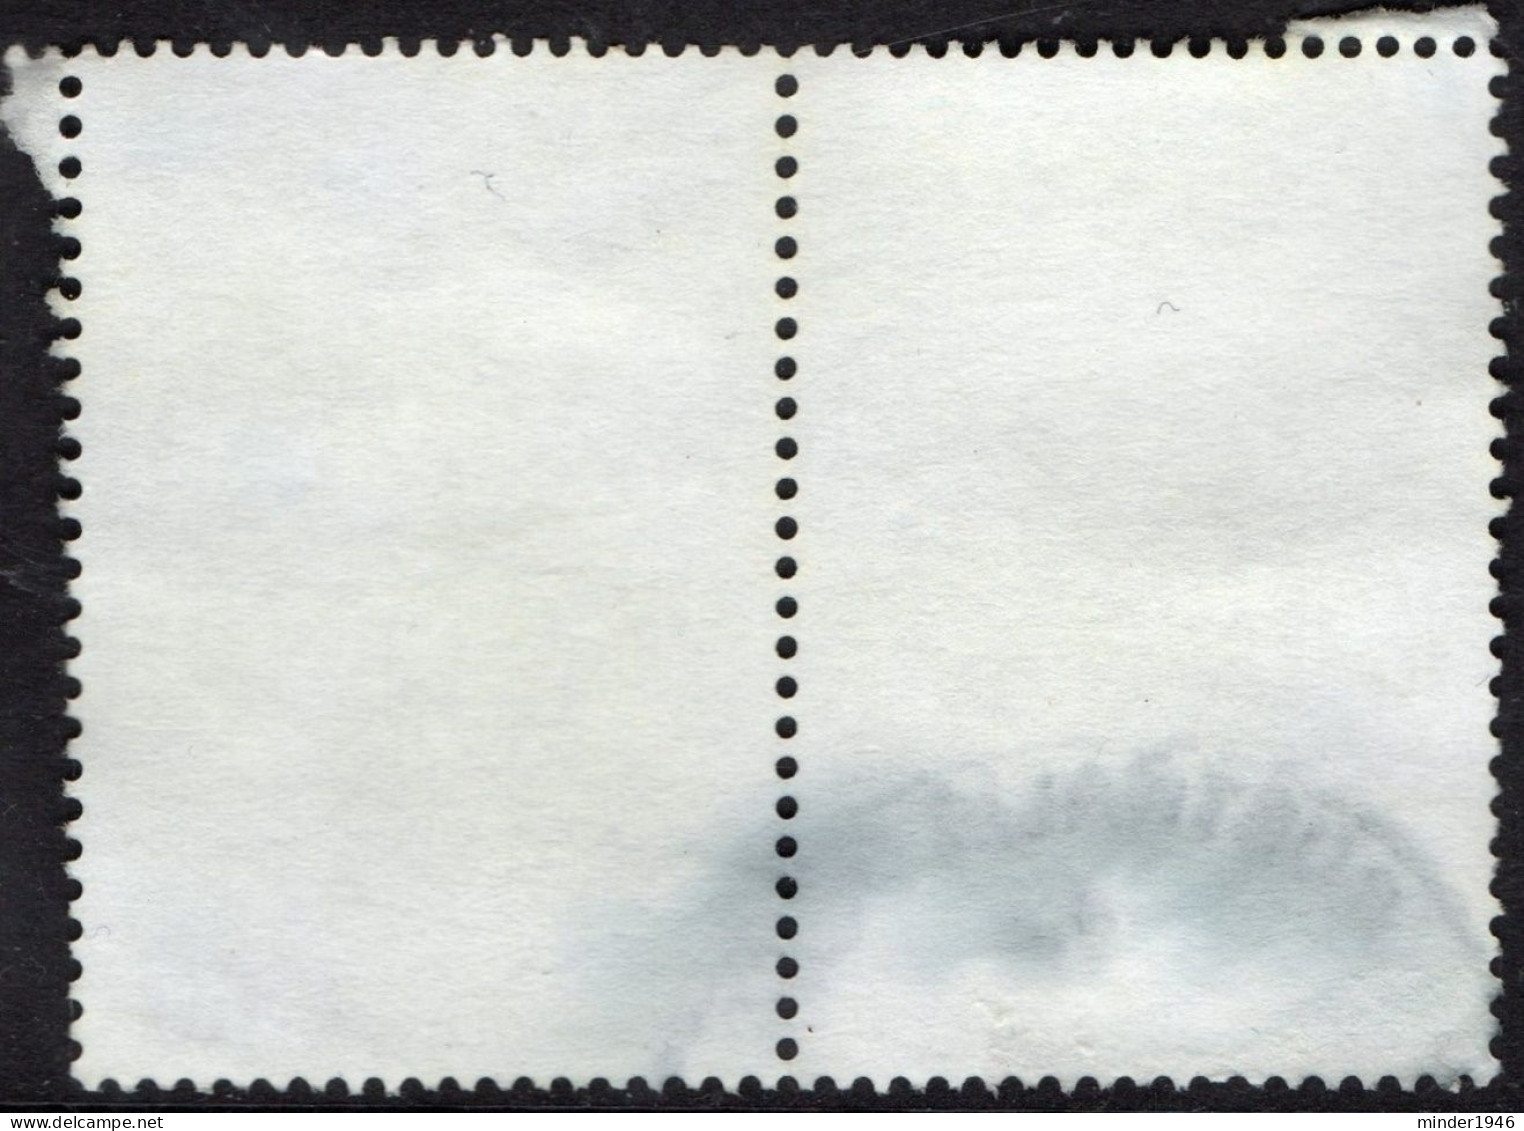 AUSTRALIAN ANTARCTIC TERRITORY (AAT) 2012 QEII 60c Joined Pair, 100th Anniv Australasian Antarctic Exp Used - Used Stamps